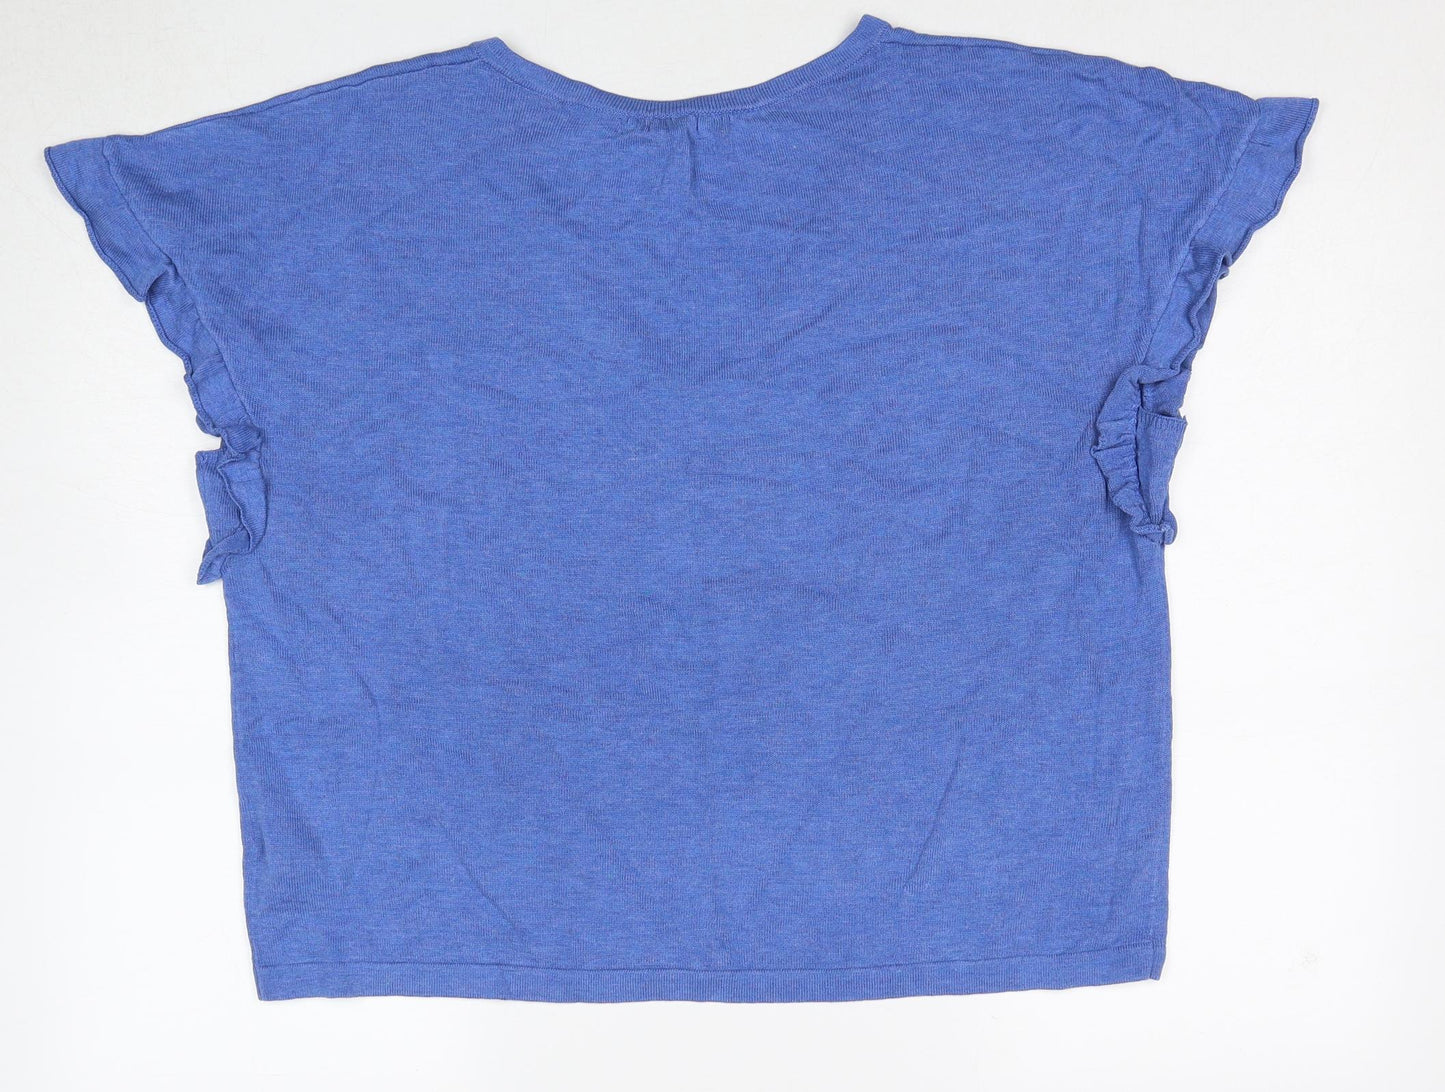 NEXT Womens Blue Acrylic Basic T-Shirt Size L V-Neck